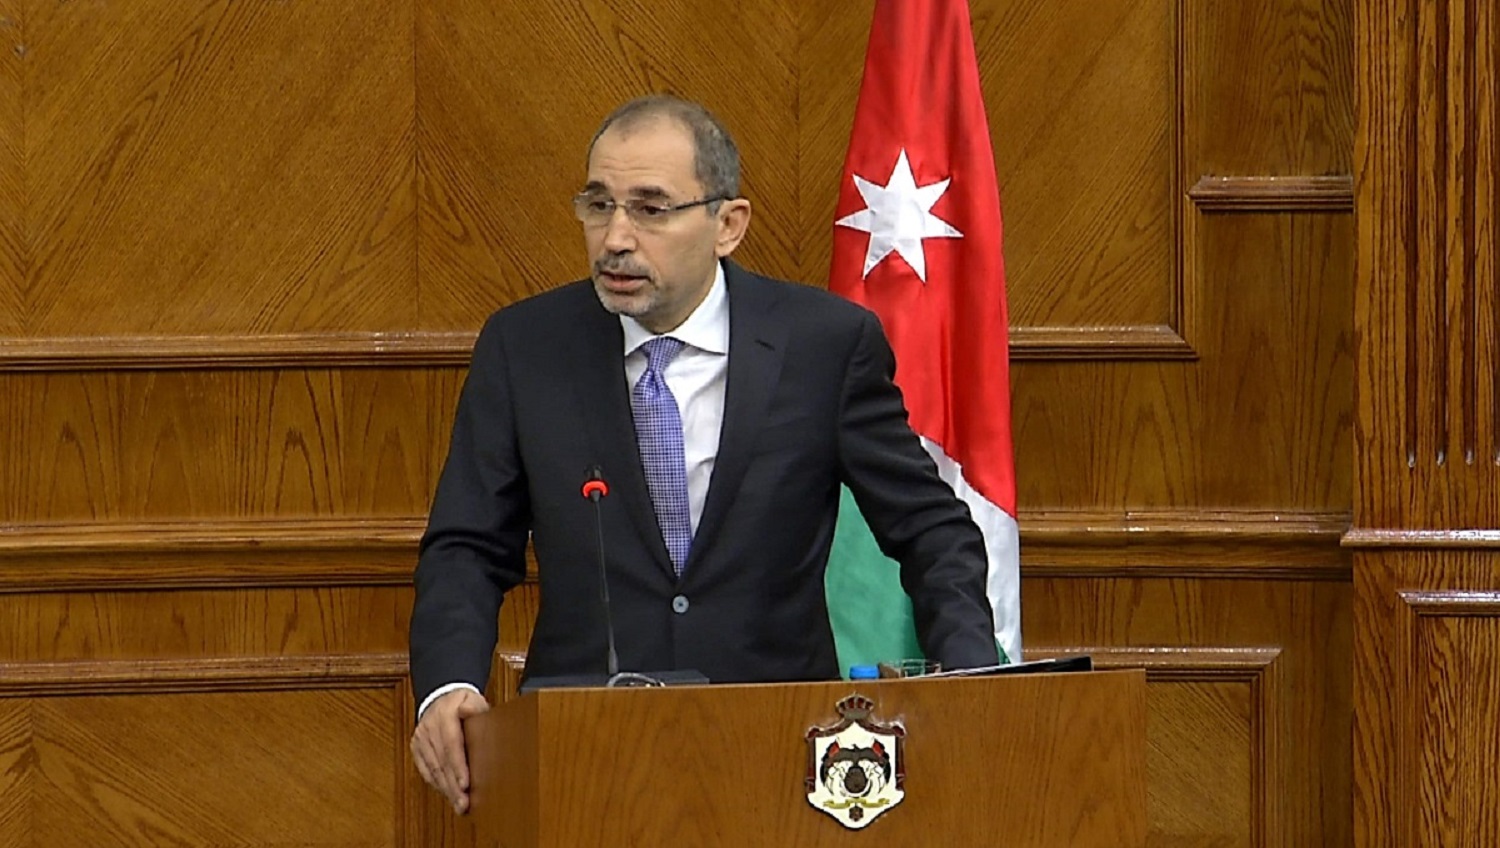 Jordan's Foreign Minister Ayman Al-Safadi